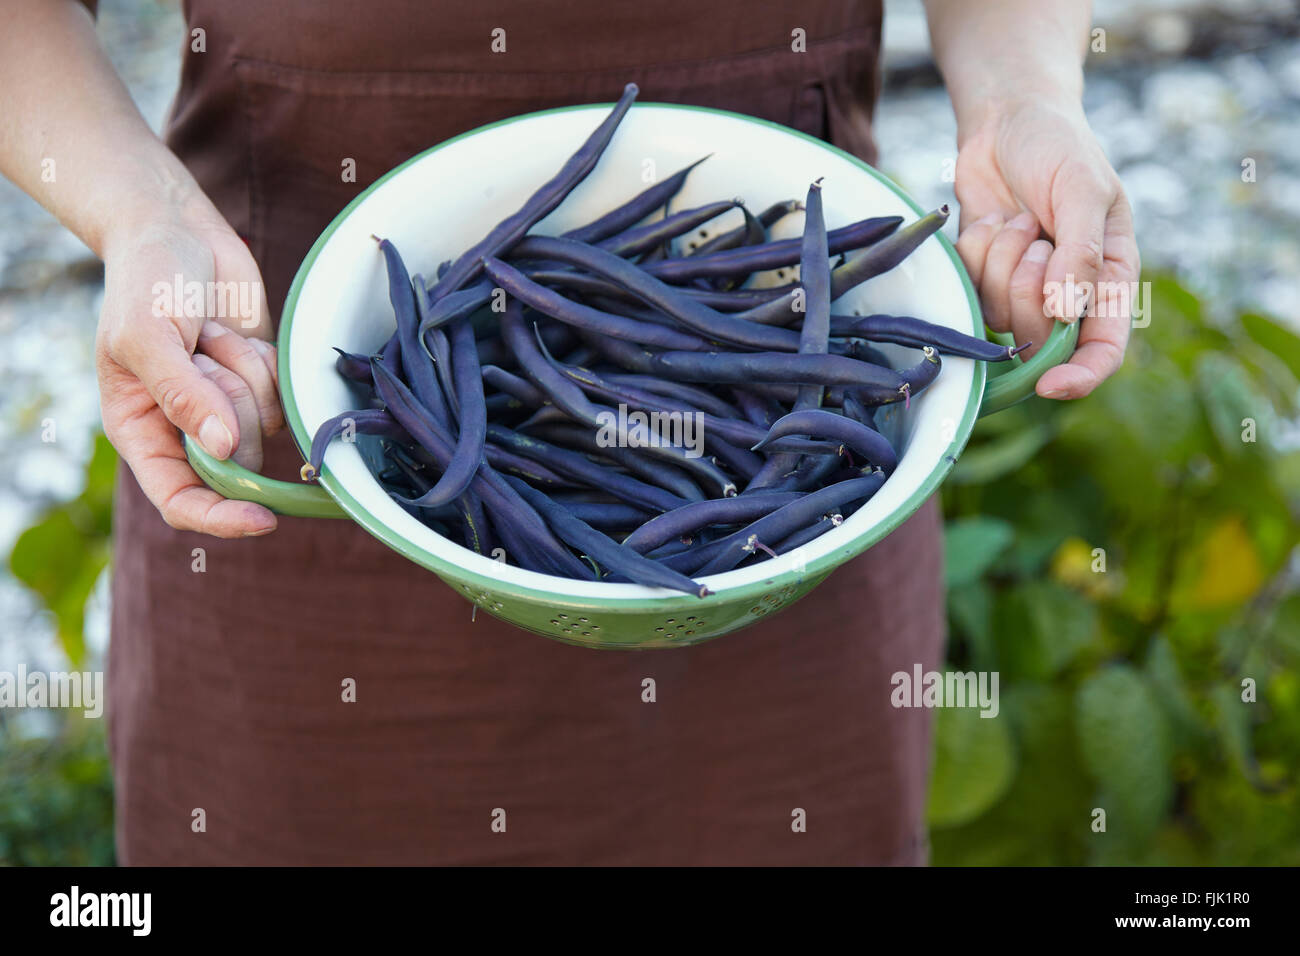 Purple beans Stock Photo